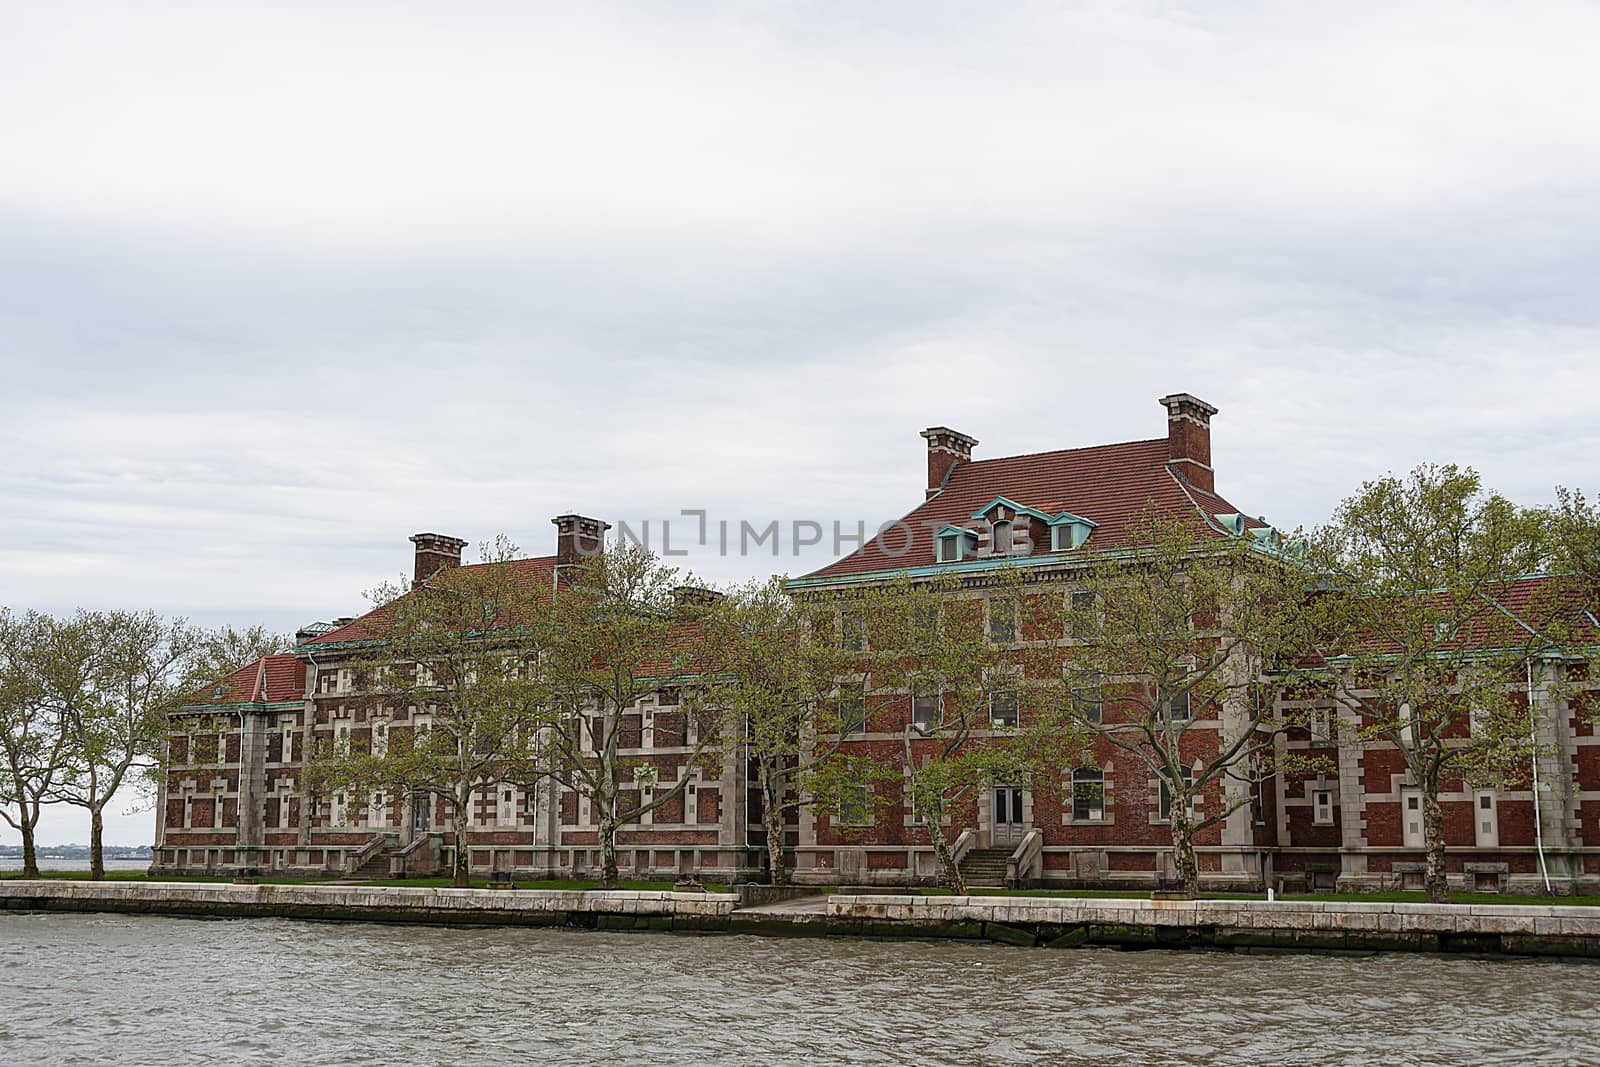 USA, New York, Ellis Island - May 2019: Ellis Island Visitor Centre and Museum - Hospital site under restoration